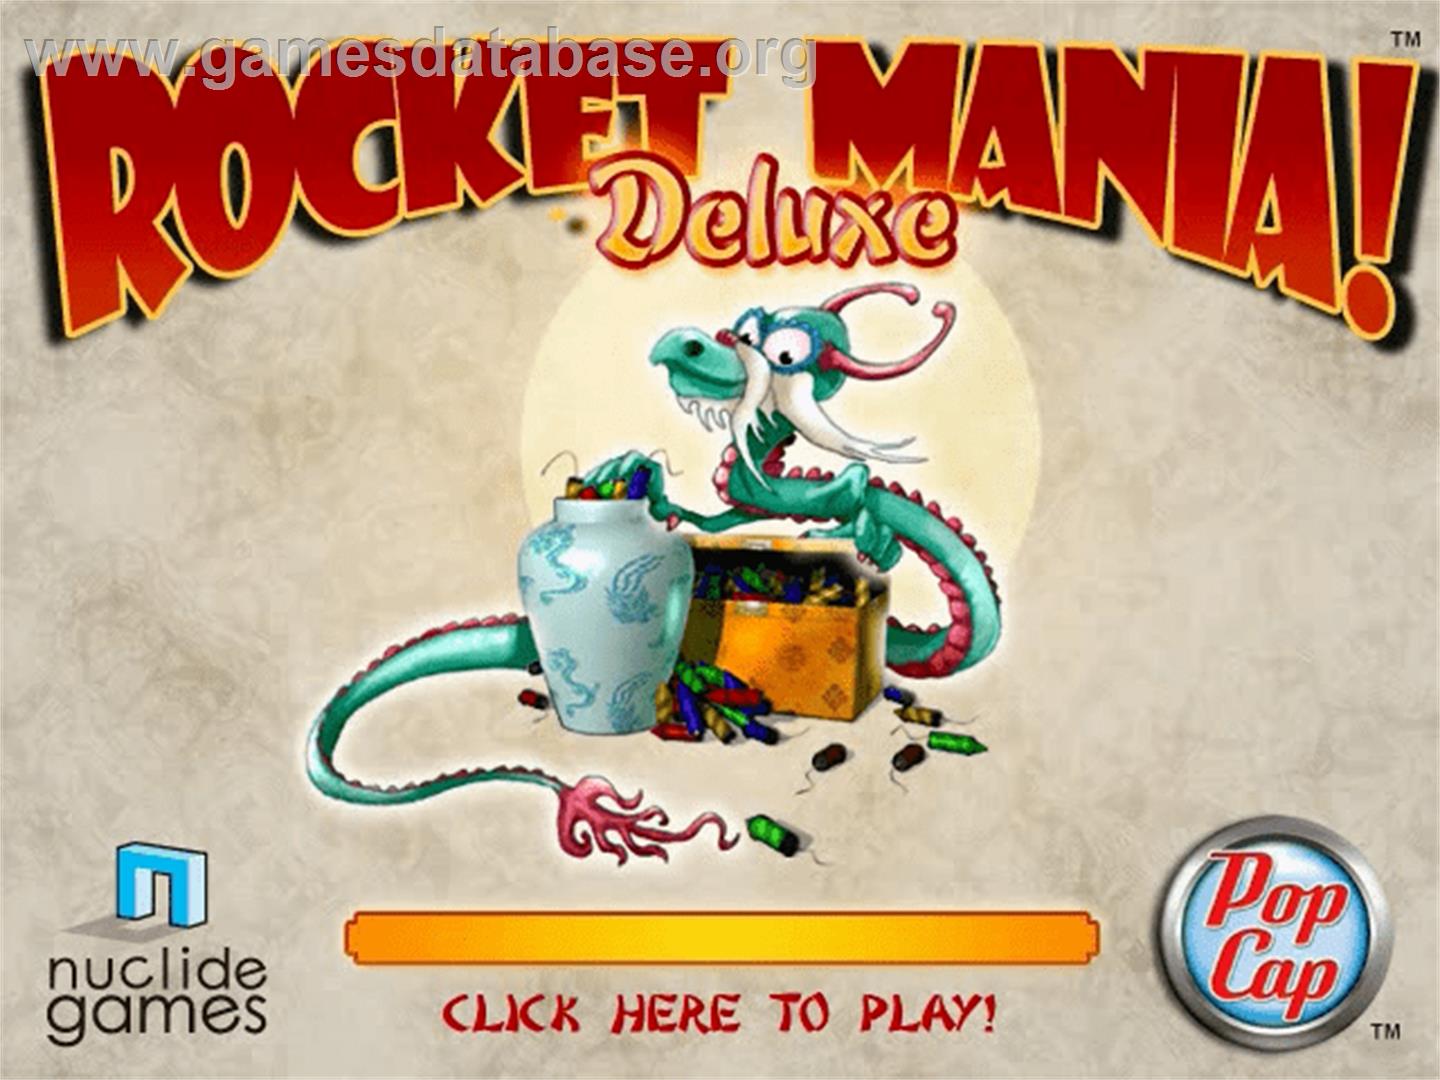 Rocket Mania Deluxe - PopCap - Artwork - Title Screen